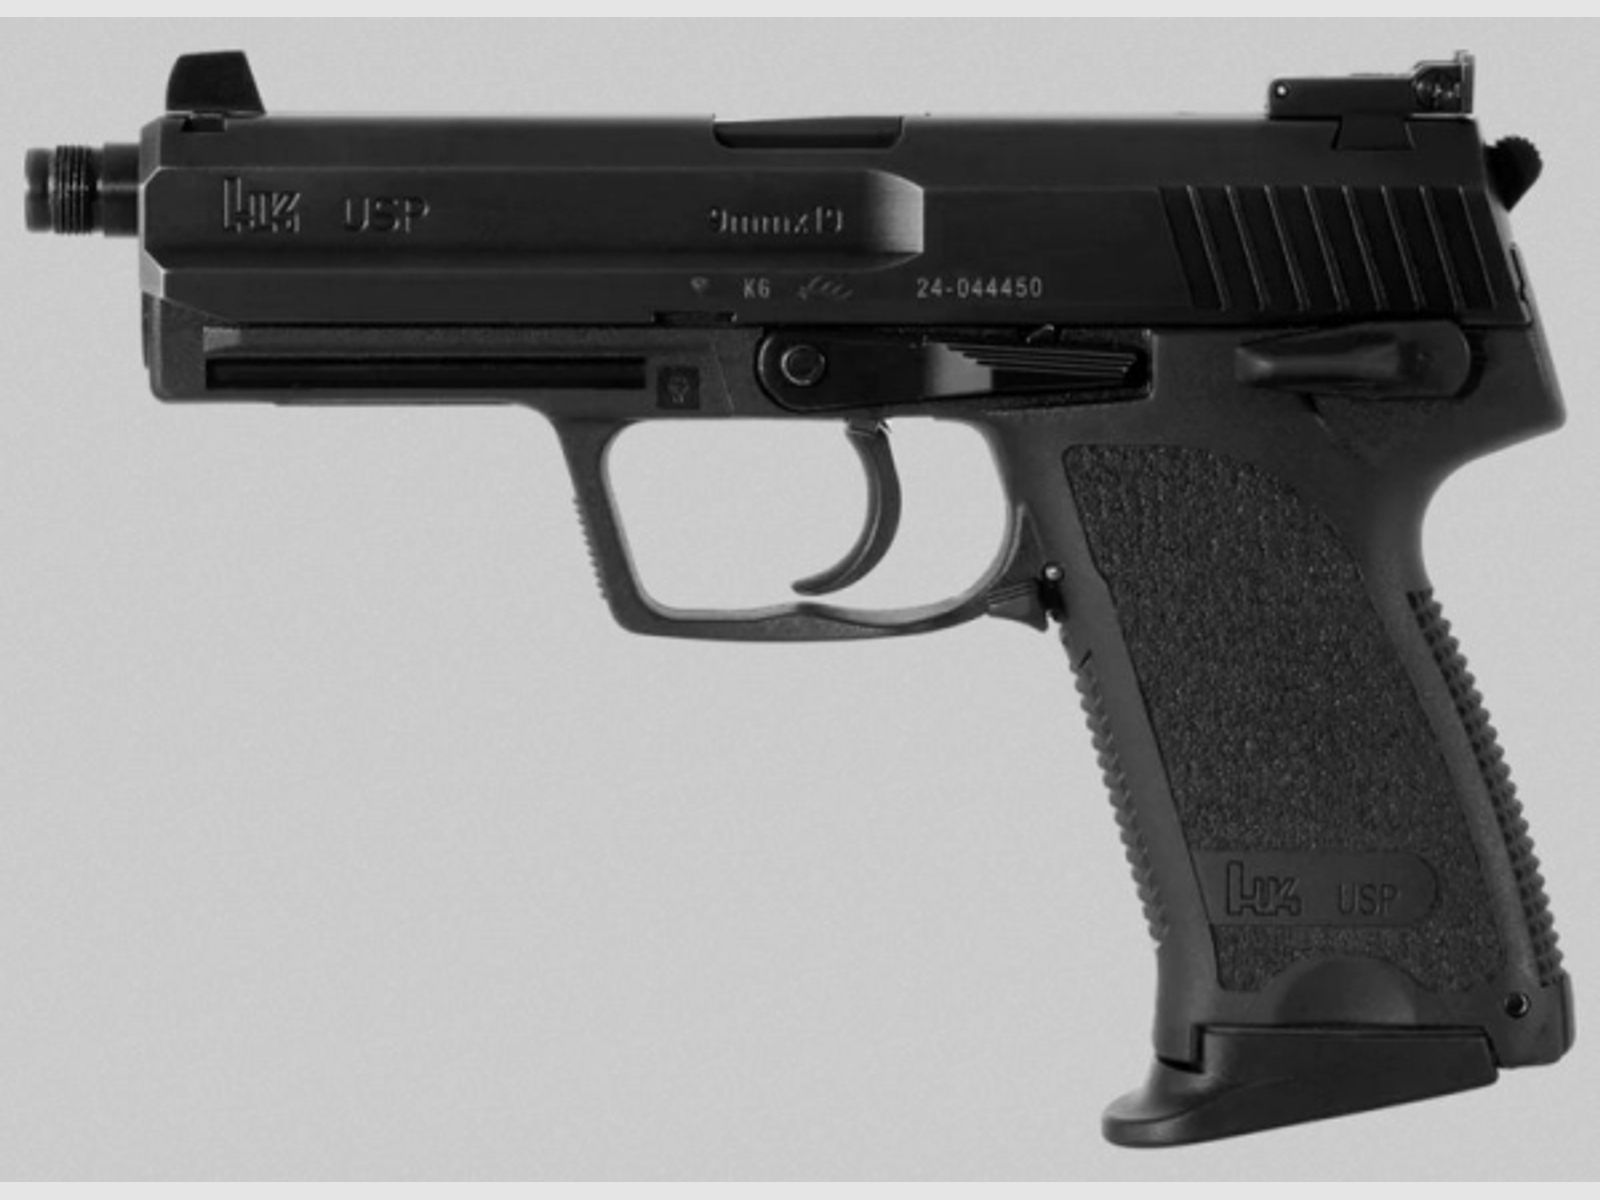 Pistole Heckler & Koch USP Tactical, Kaliber .45 Auto - sofort lieferbar